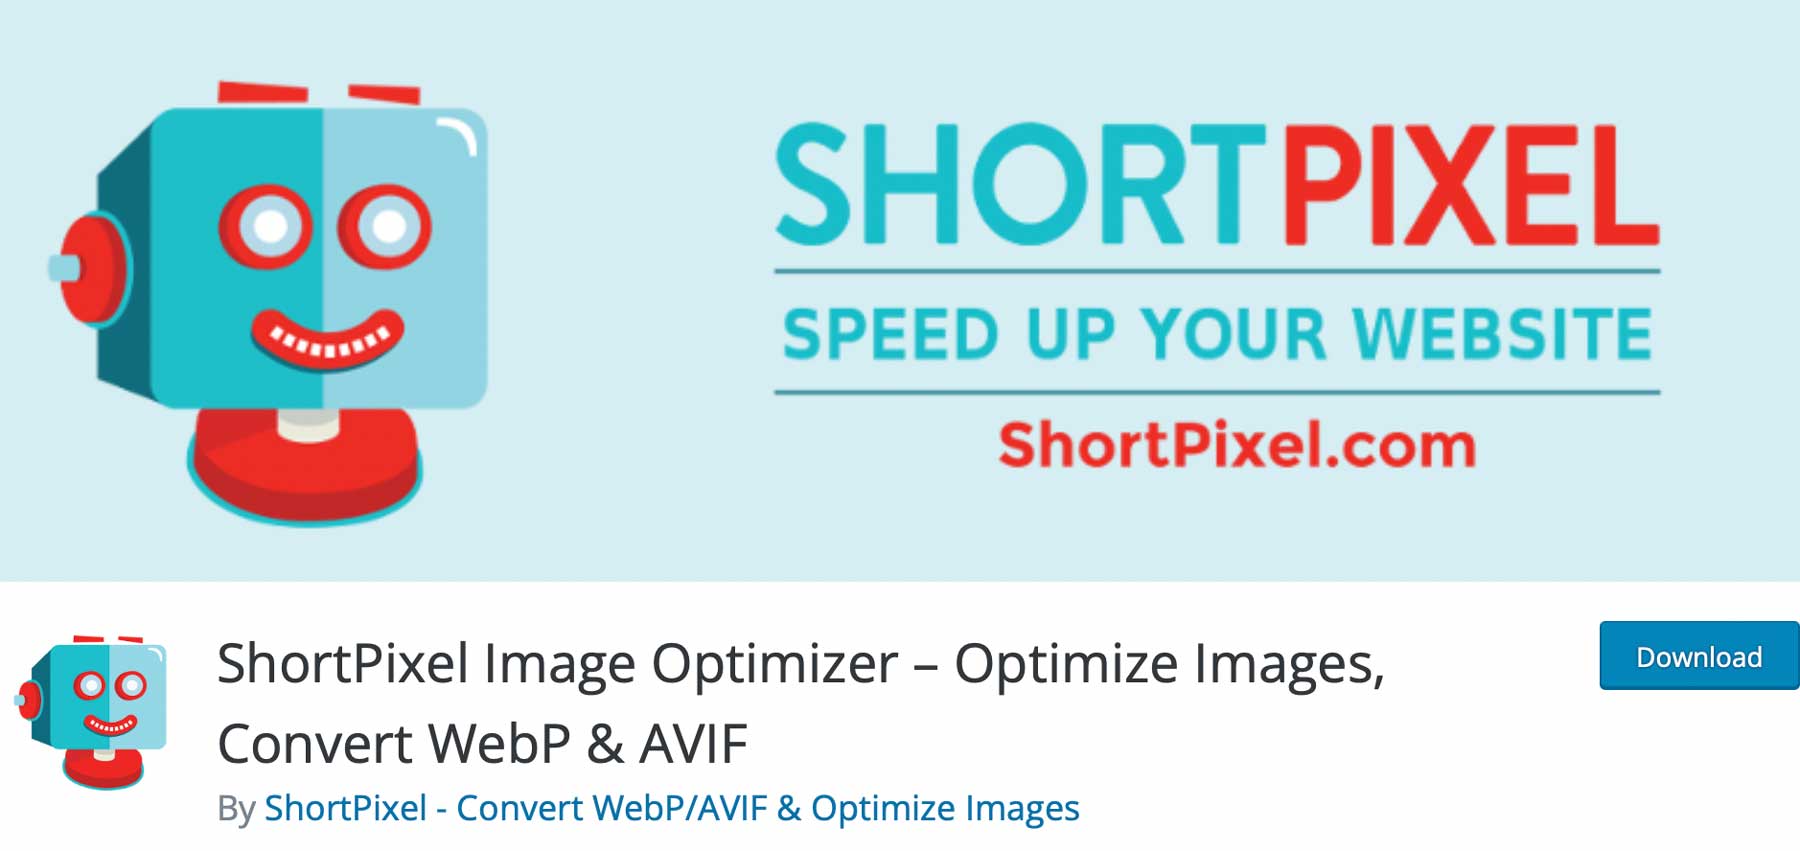 The ShortPixel Image Optimizer plugin